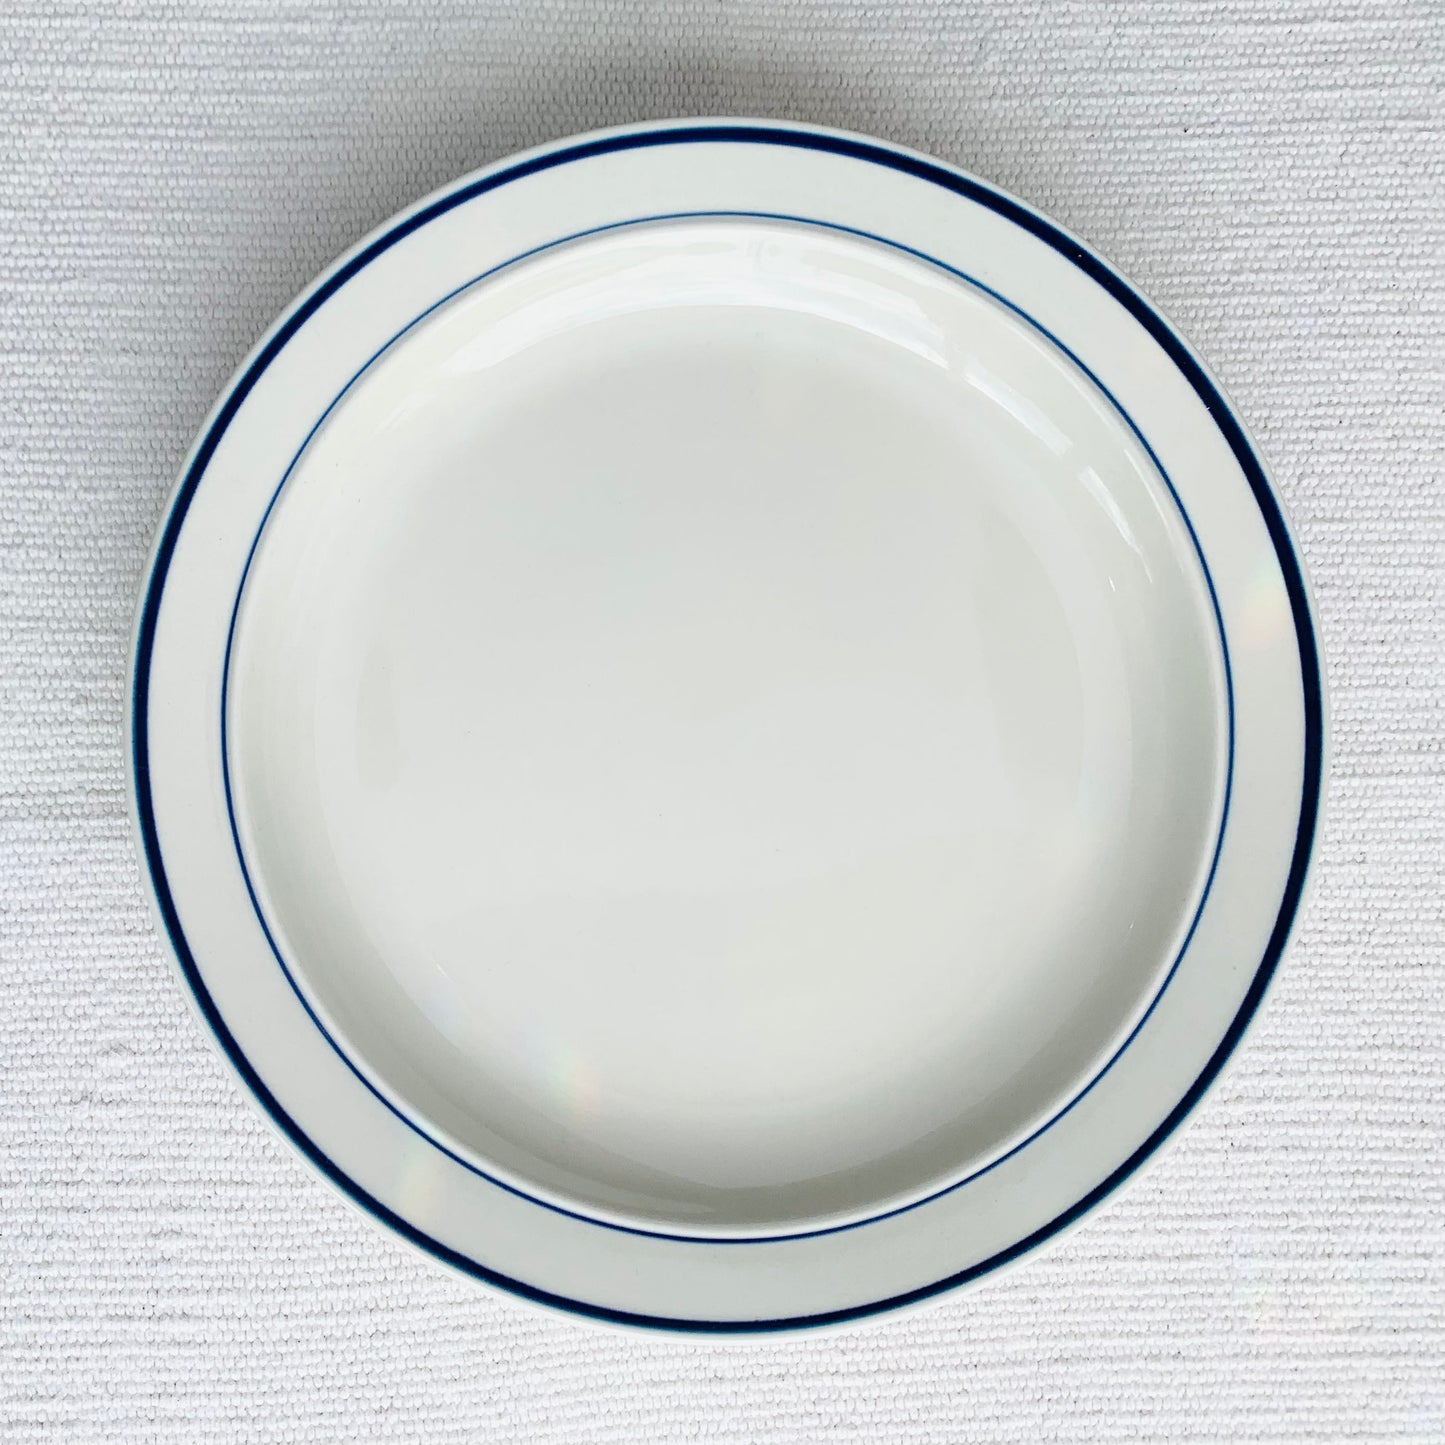 Tidy Mid Century Modern Dinner Plate